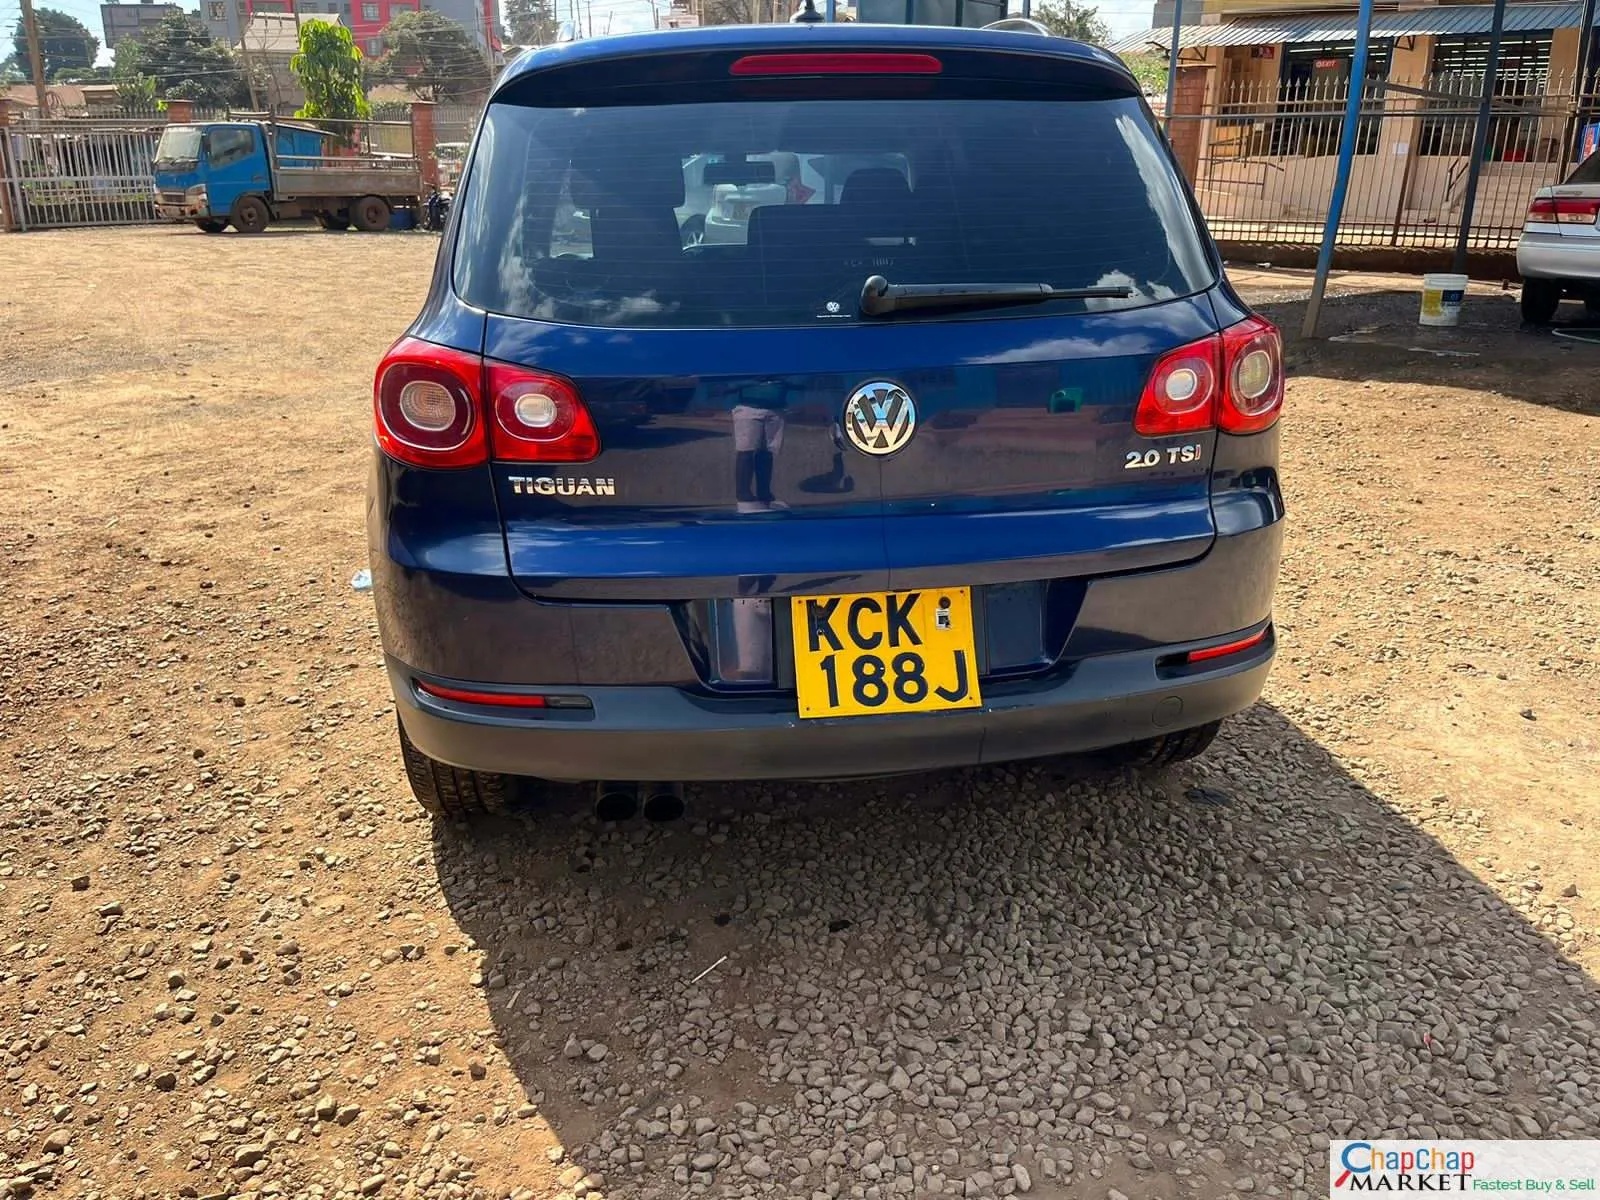 Volkswagen Tiguan for sale in Kenya You Pay 30% Deposit Trade in Ok EXCLUSIVE